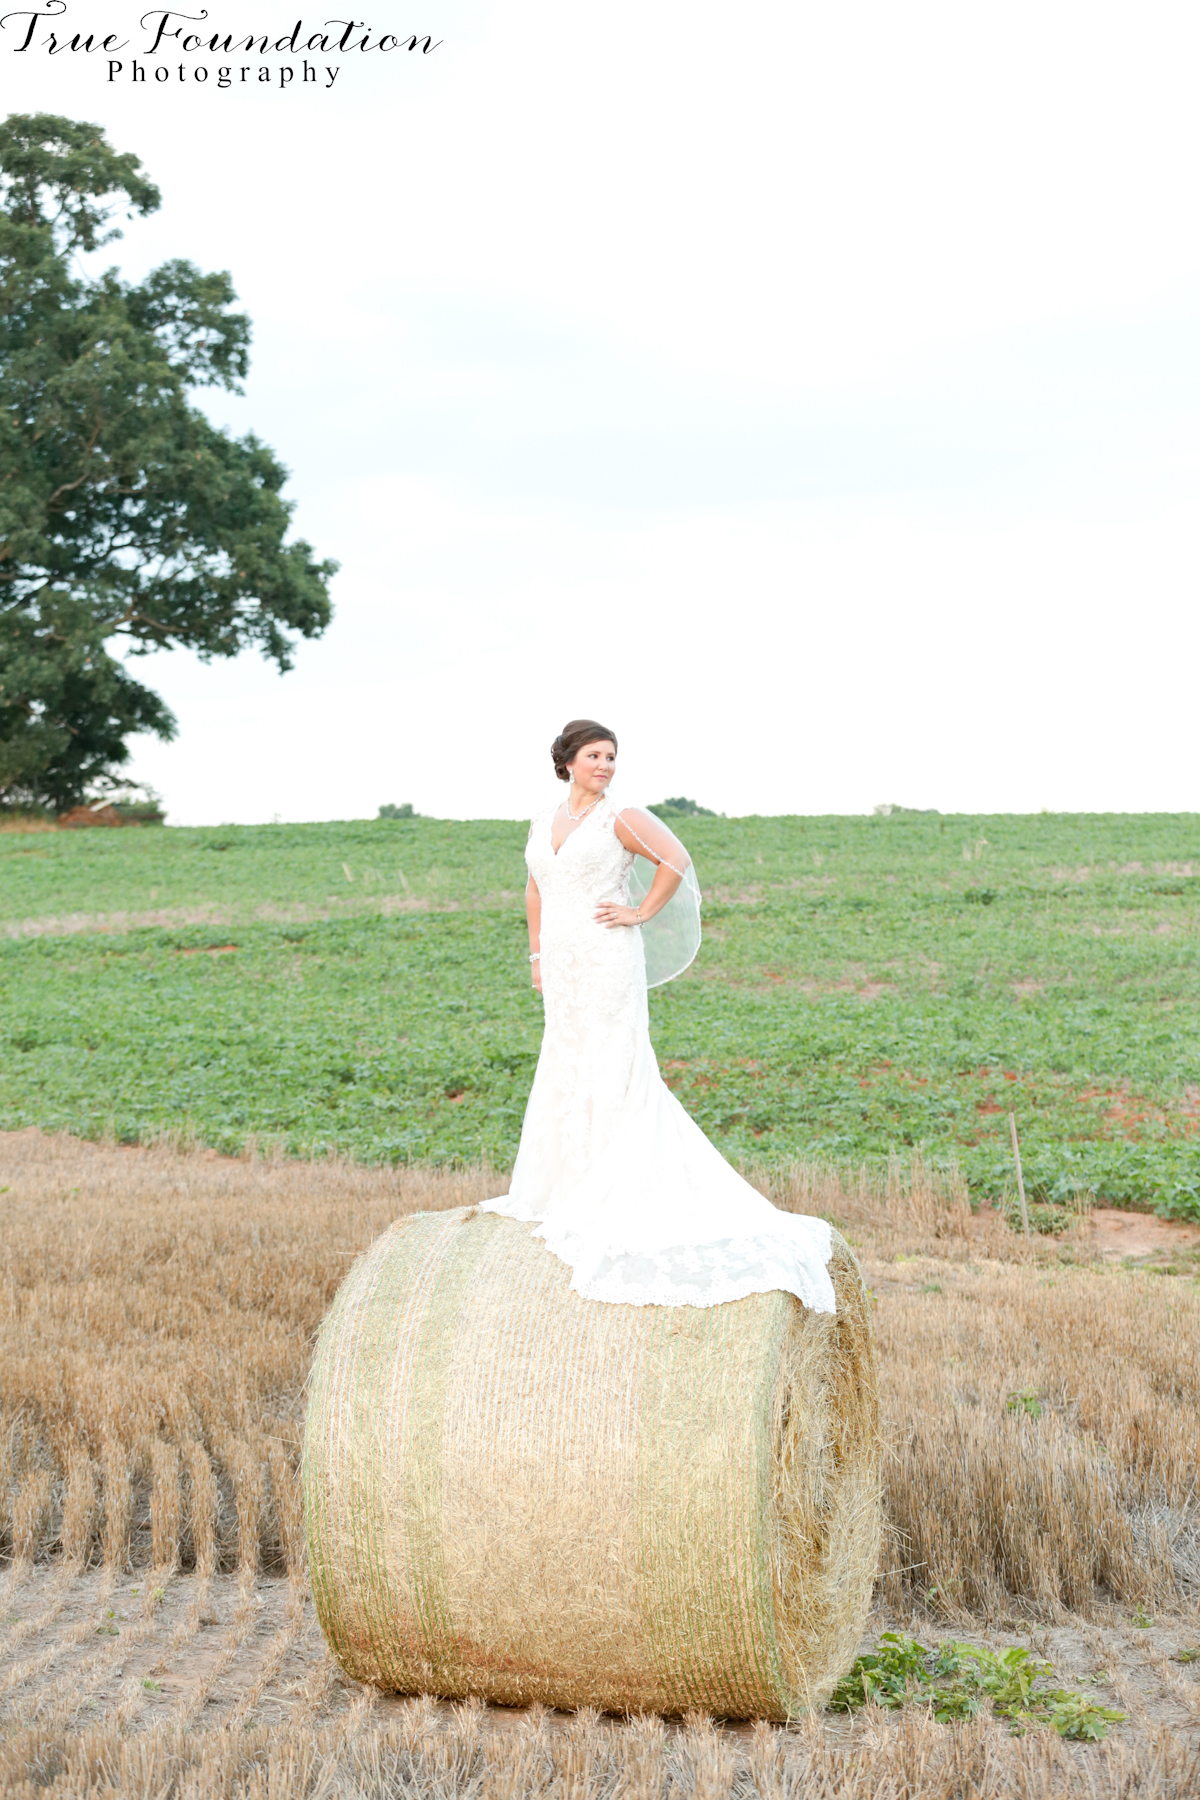 Bridal - Portrait - Photography - Photos - Hendersonville - NC - Shelby - Photographers - Farm - Country - Pinterest - Bride (49)